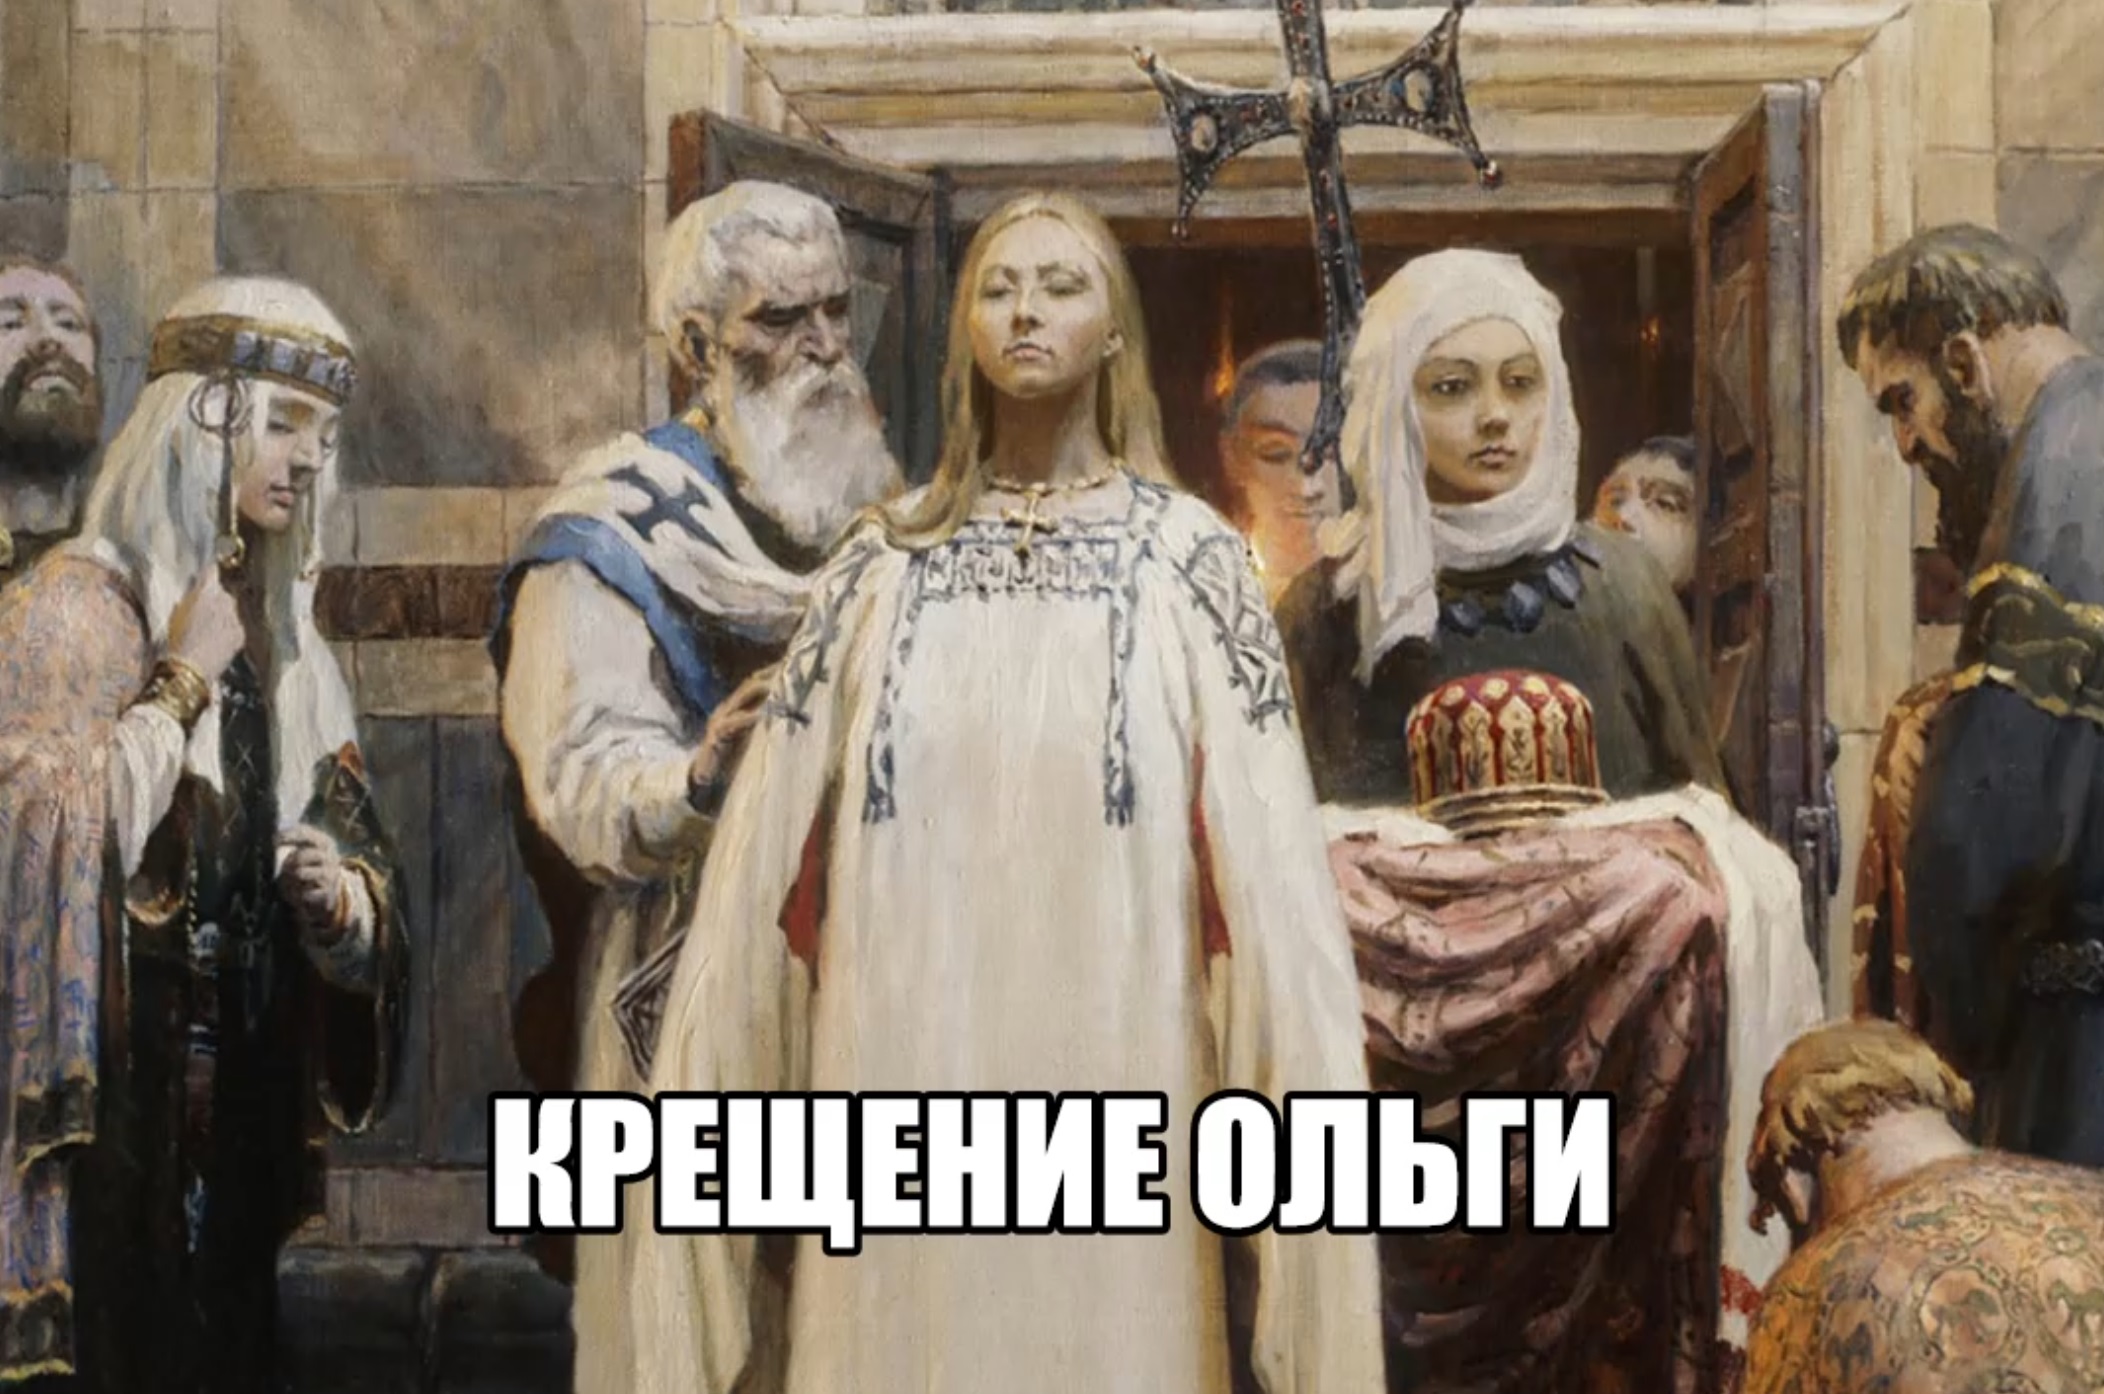 Прощание с князем. Акимов крещение княгини Ольги в Константинополе. Крещение княгини Ольги фото.